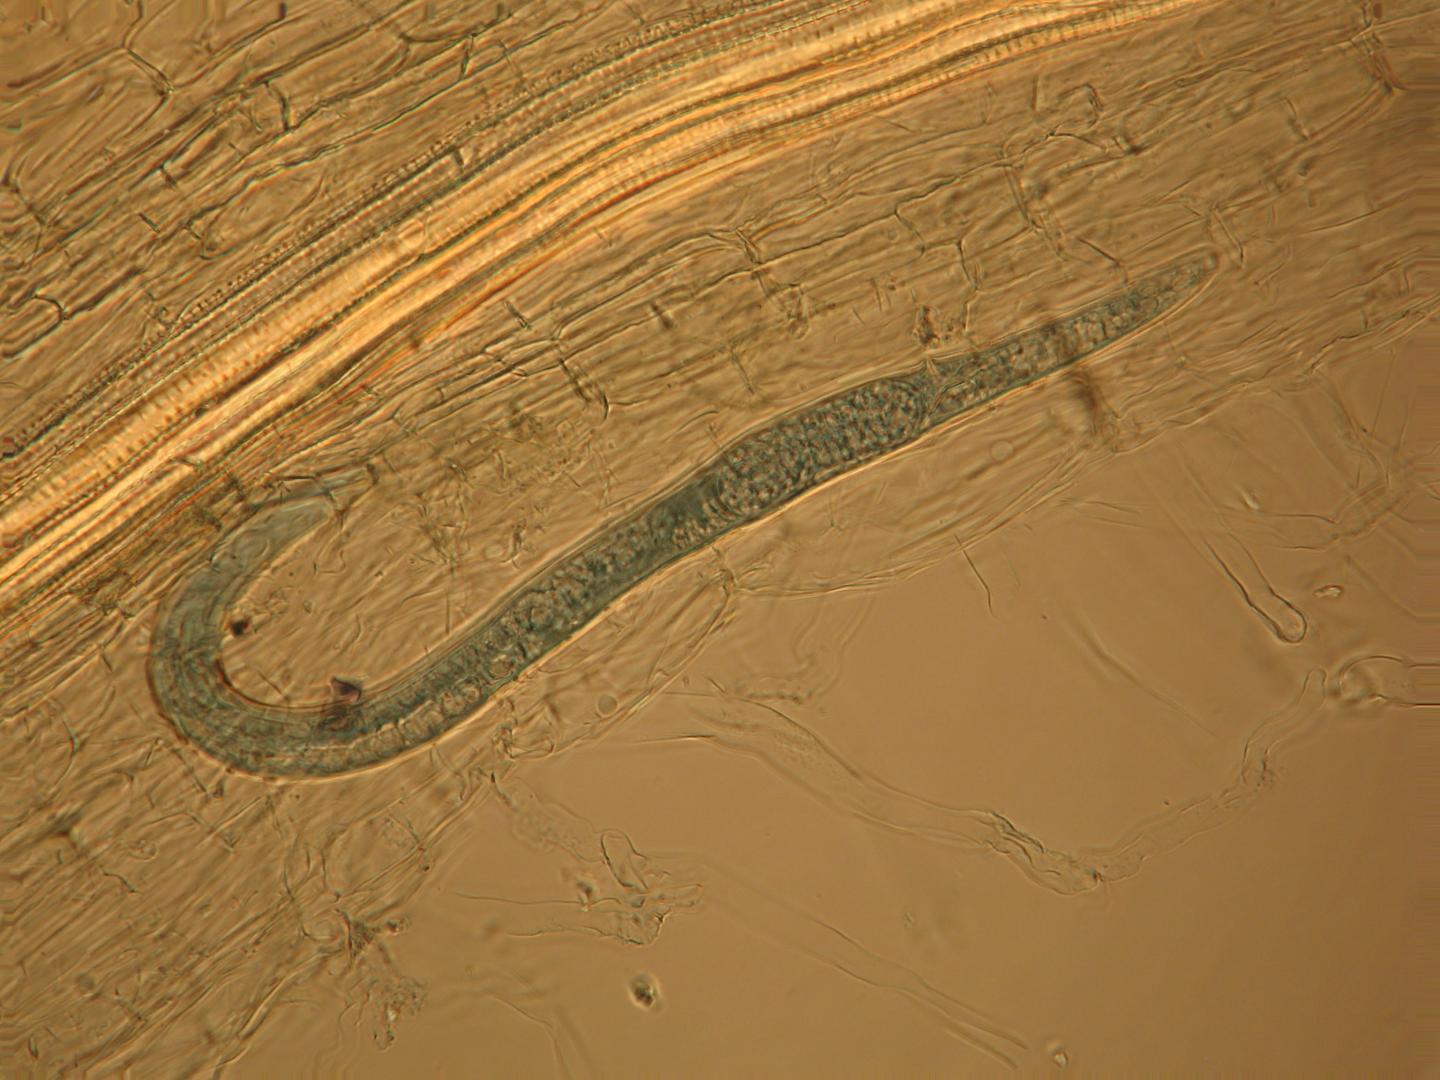 Female Lesion Nematode in White Clover Roots